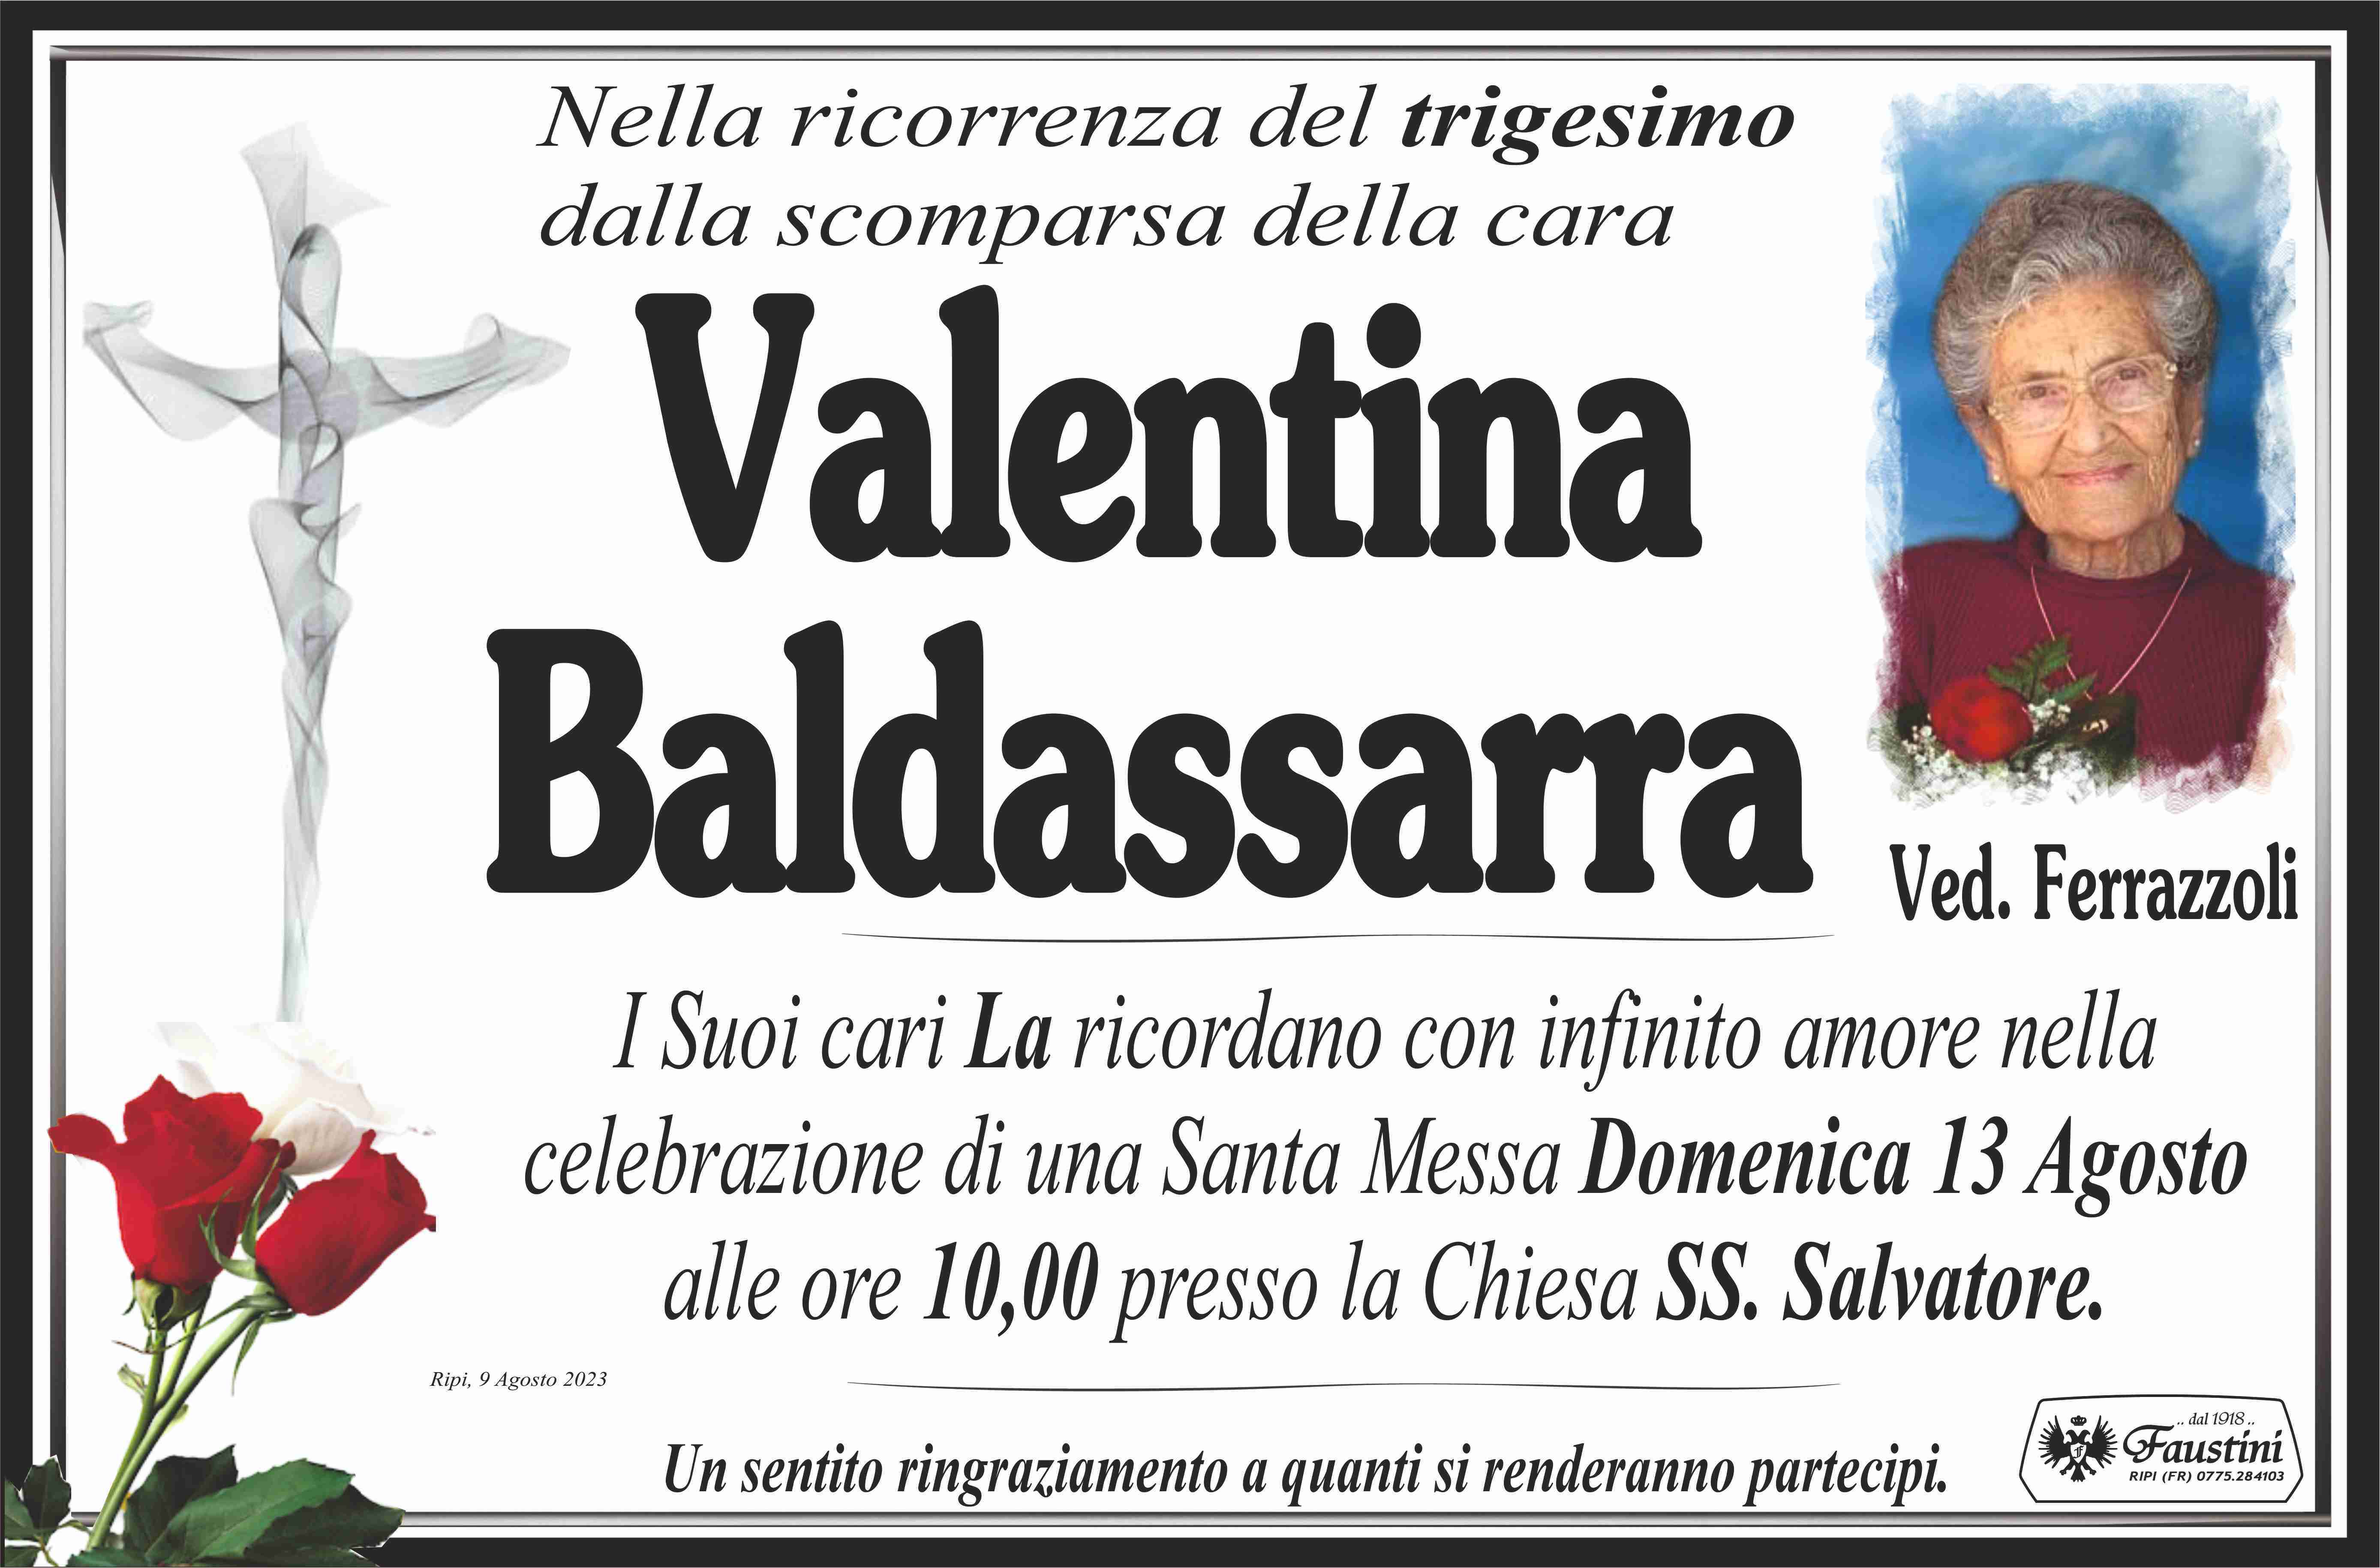 Valentina Baldassarra